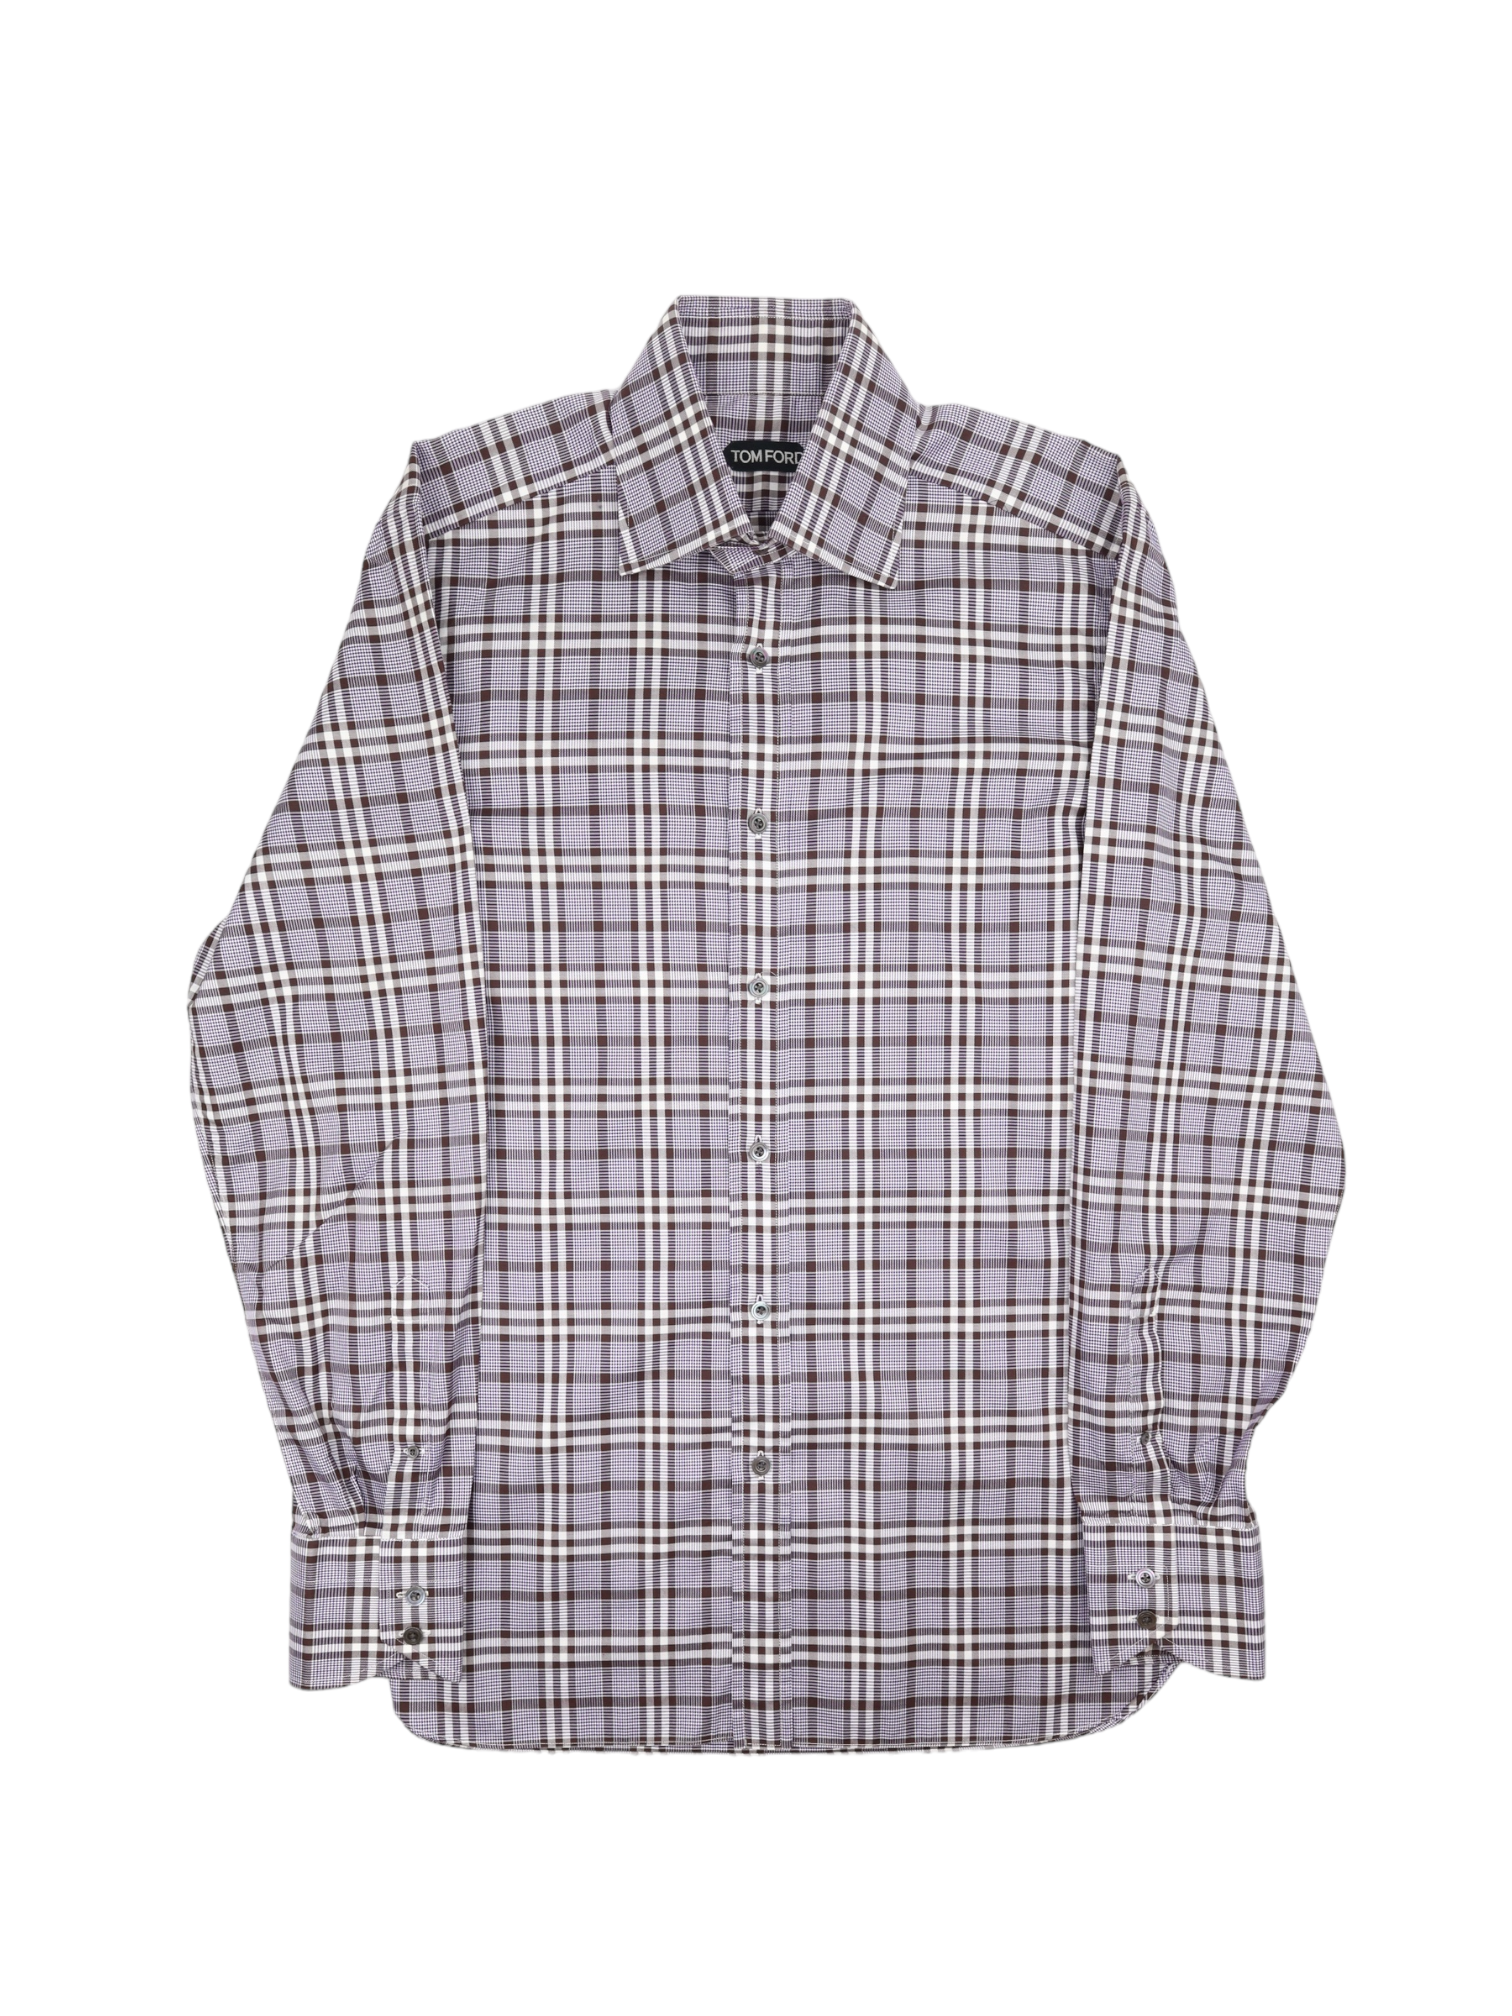 Tom Ford Purple Overcheck Shirt